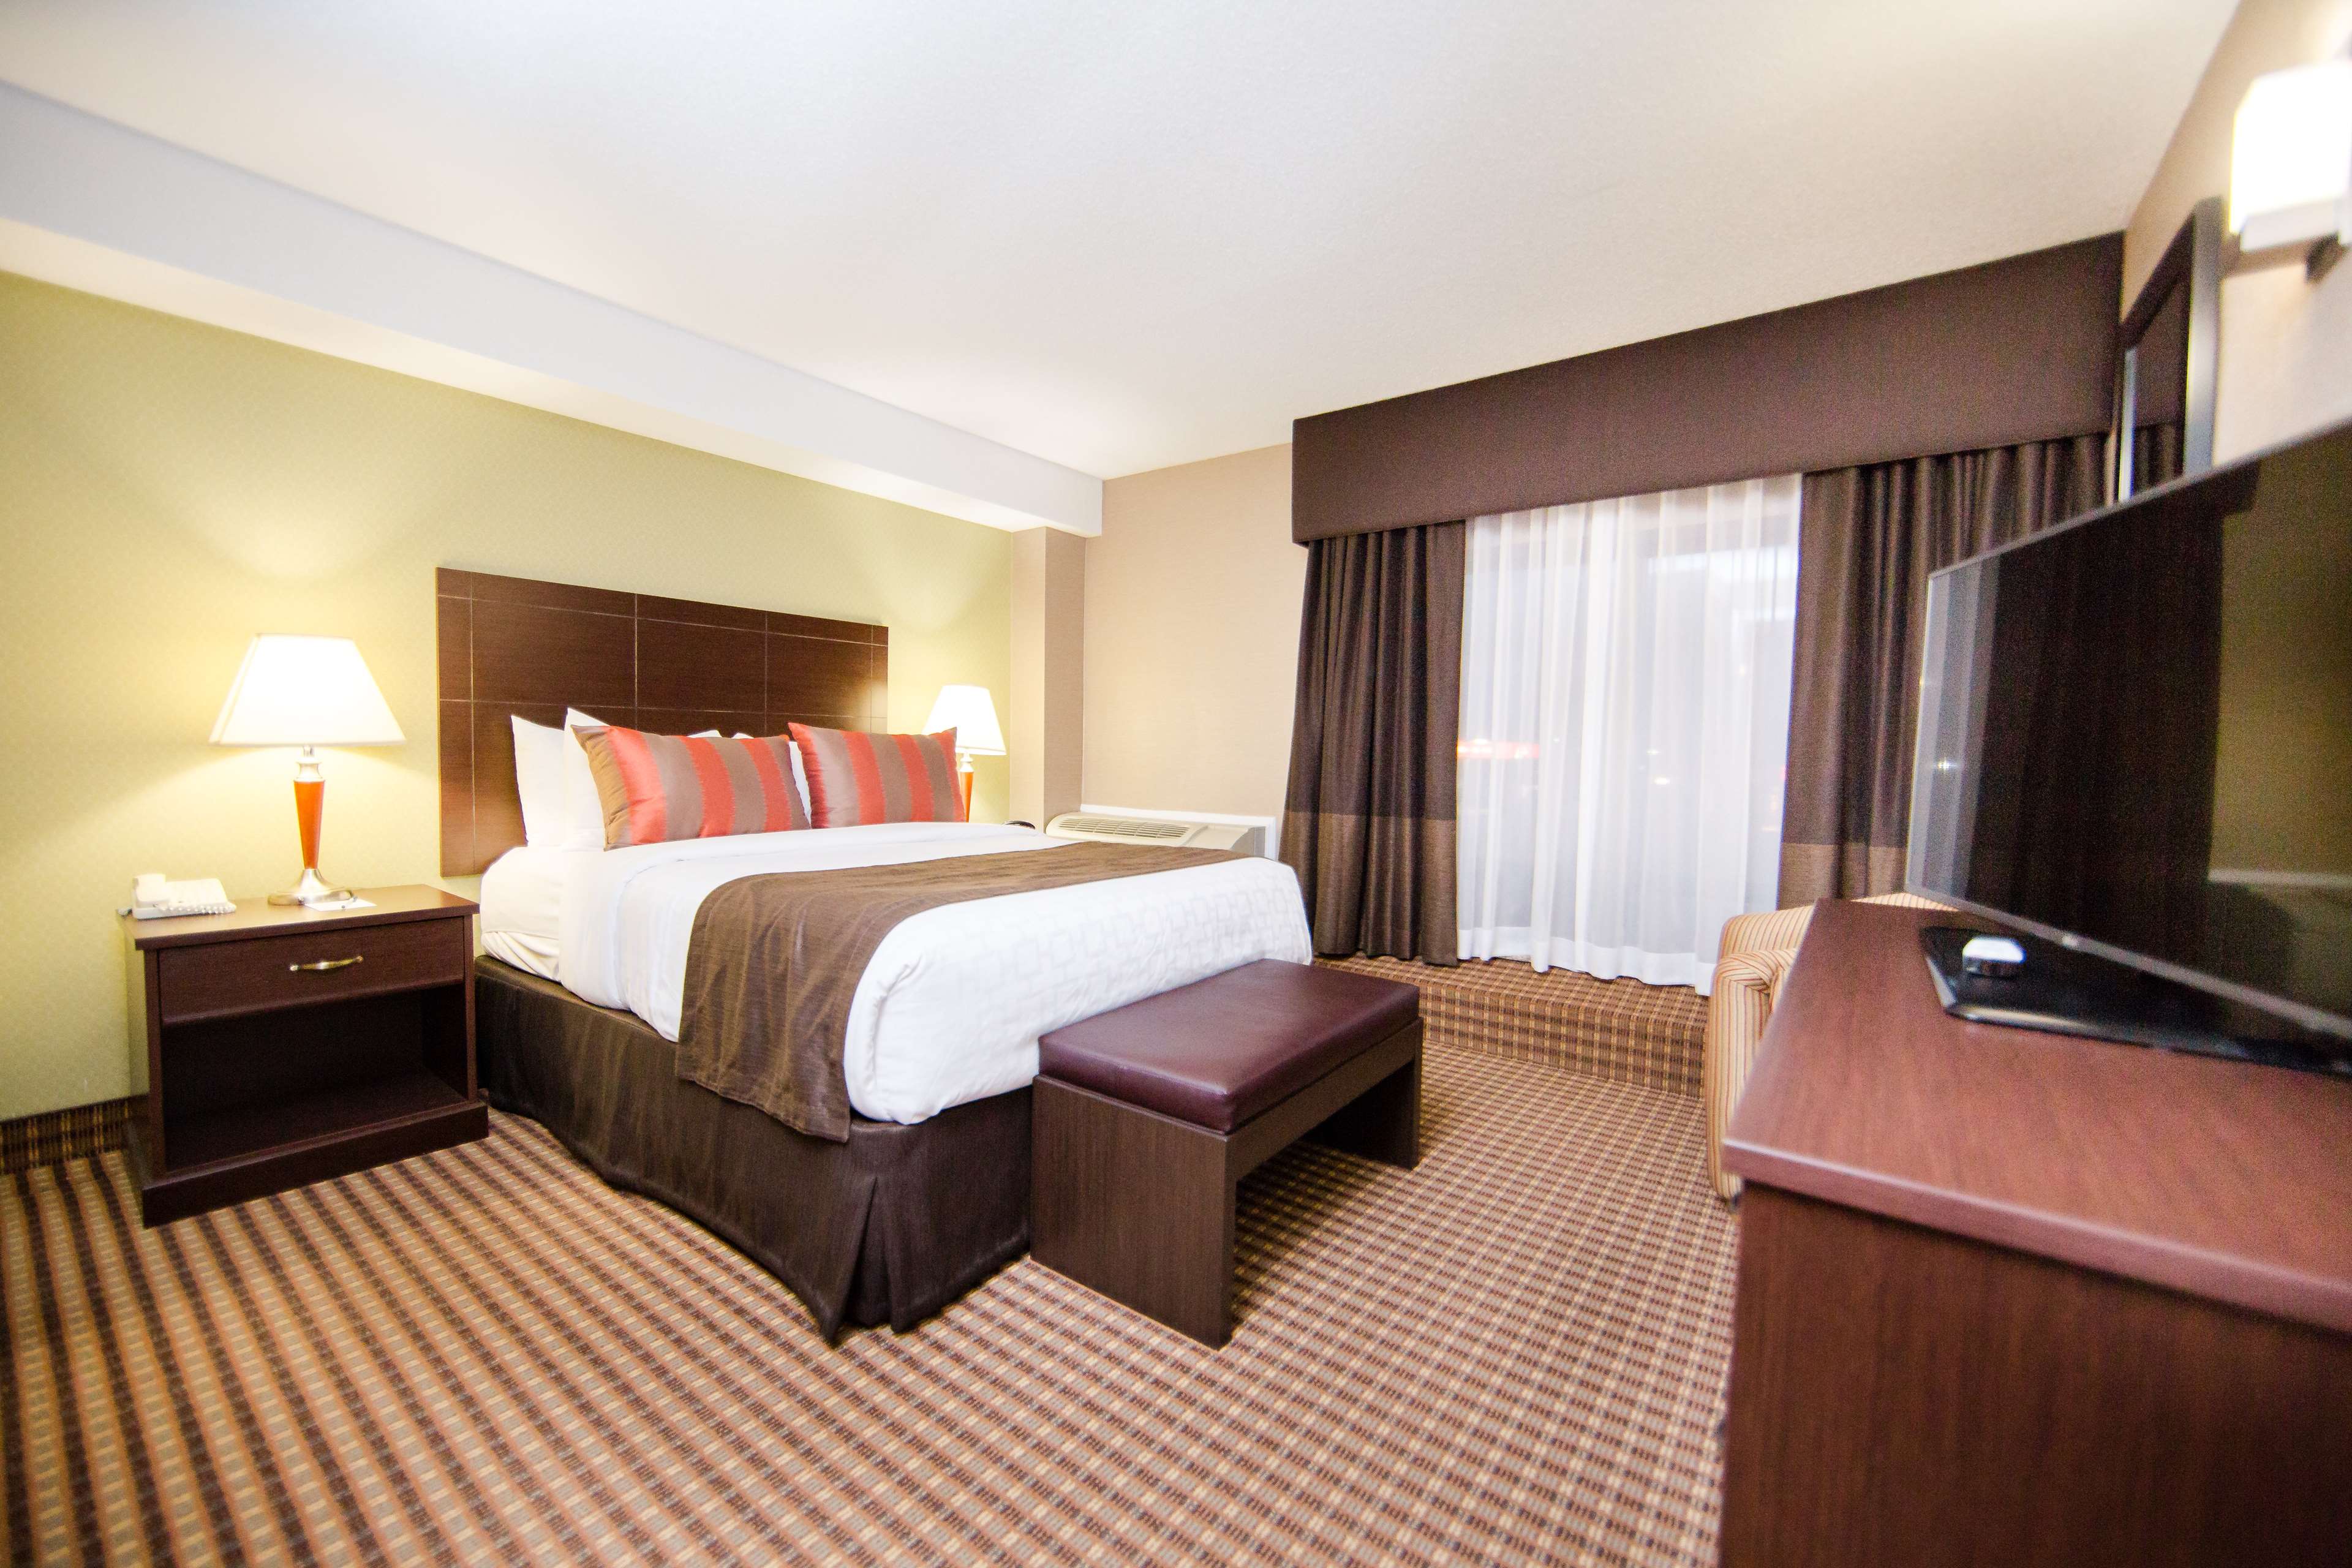 King Suite Bedroom Best Western Plus Ottawa Kanata Hotel & Conference Centre Ottawa (613)828-2741